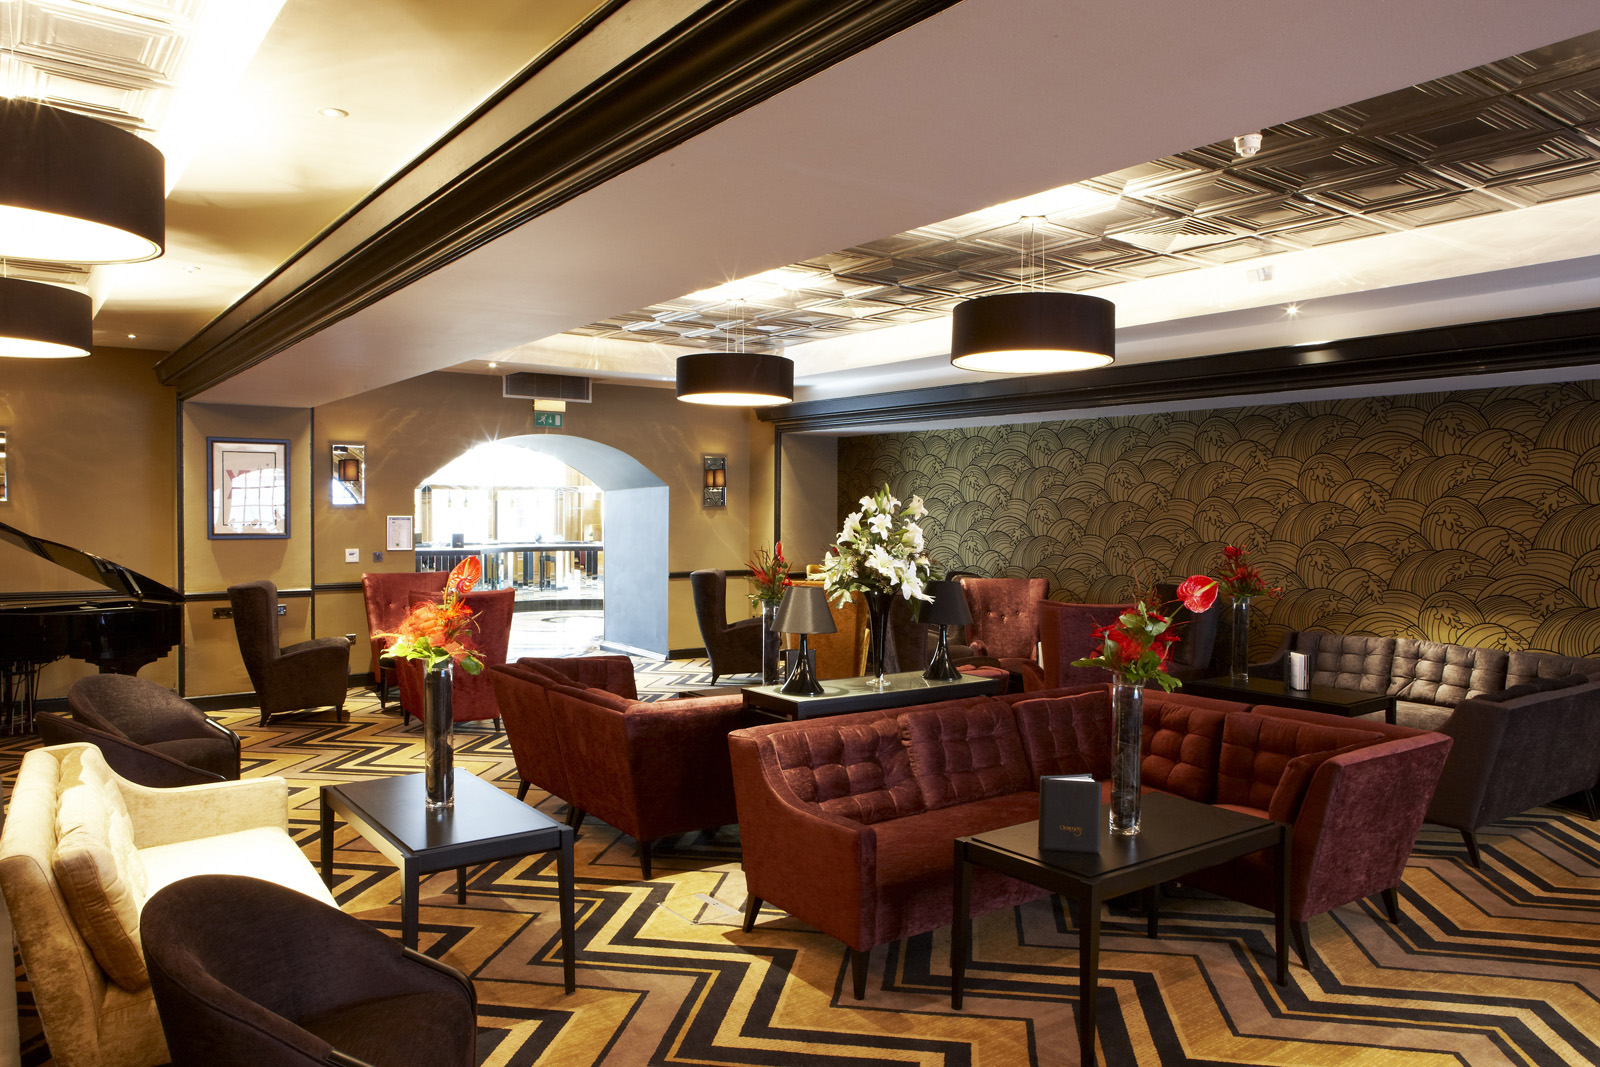 Grand Central Hotel bar, Glasgow | Hotel Photography UK